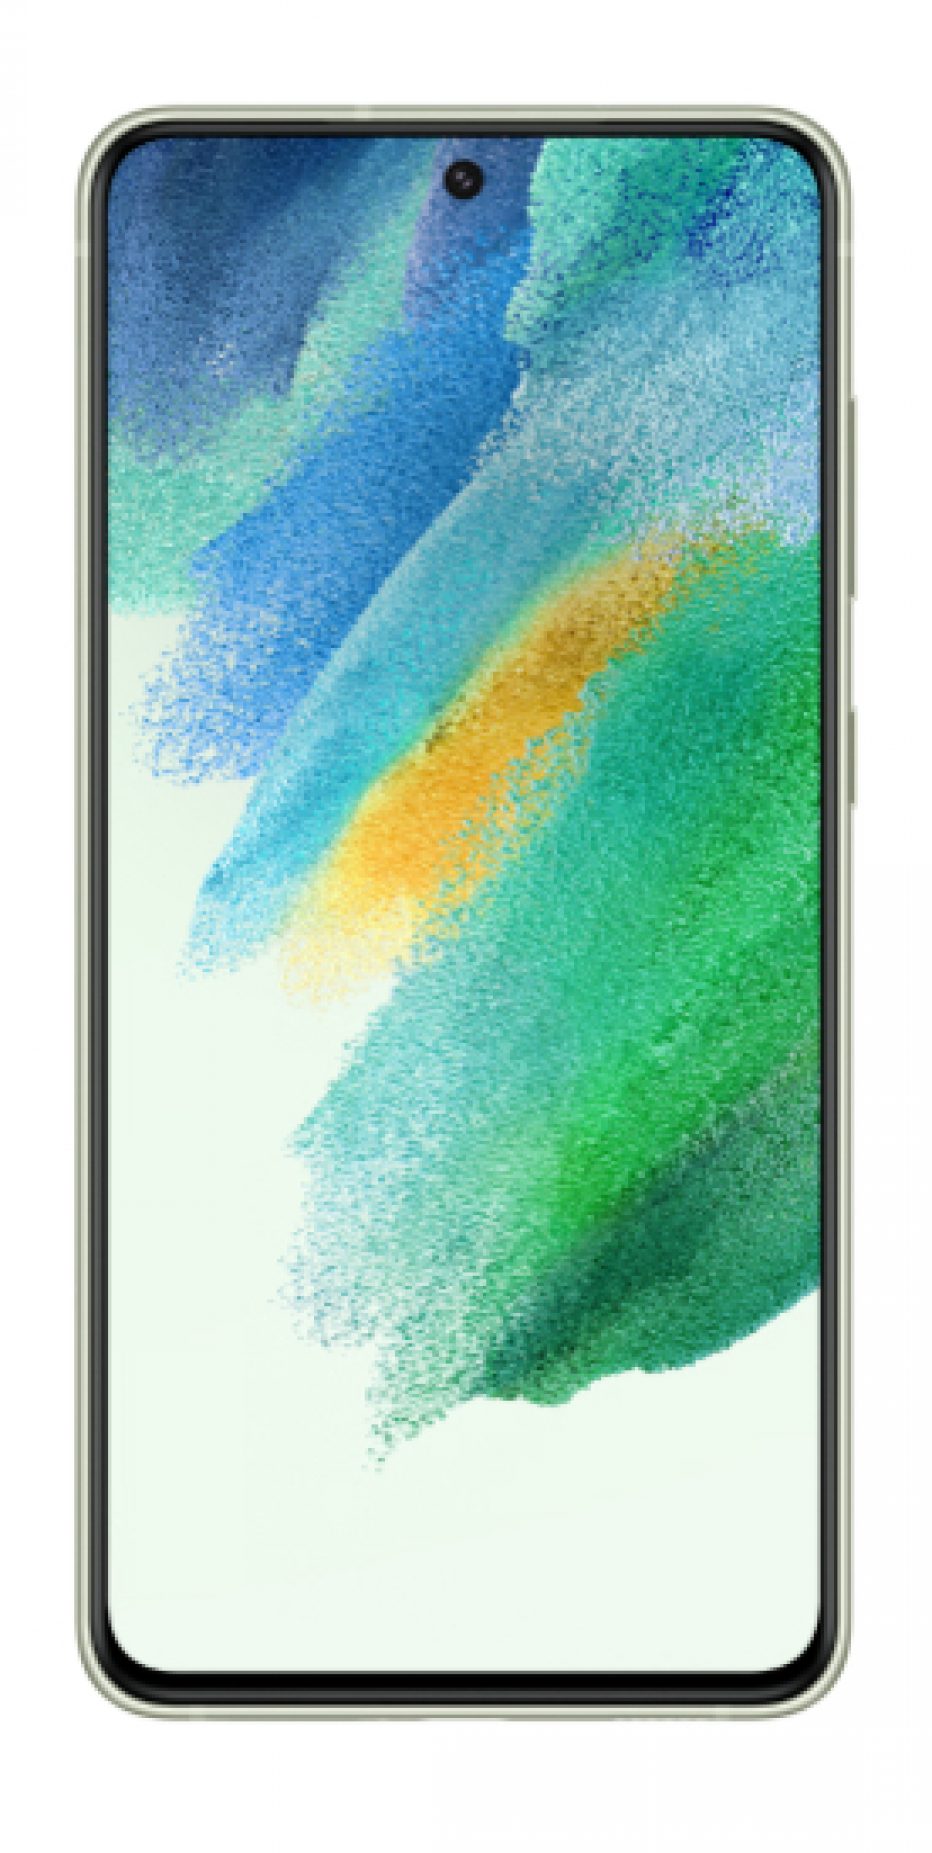 Samsung Galaxy S21 FE a $379.990 en Ripley